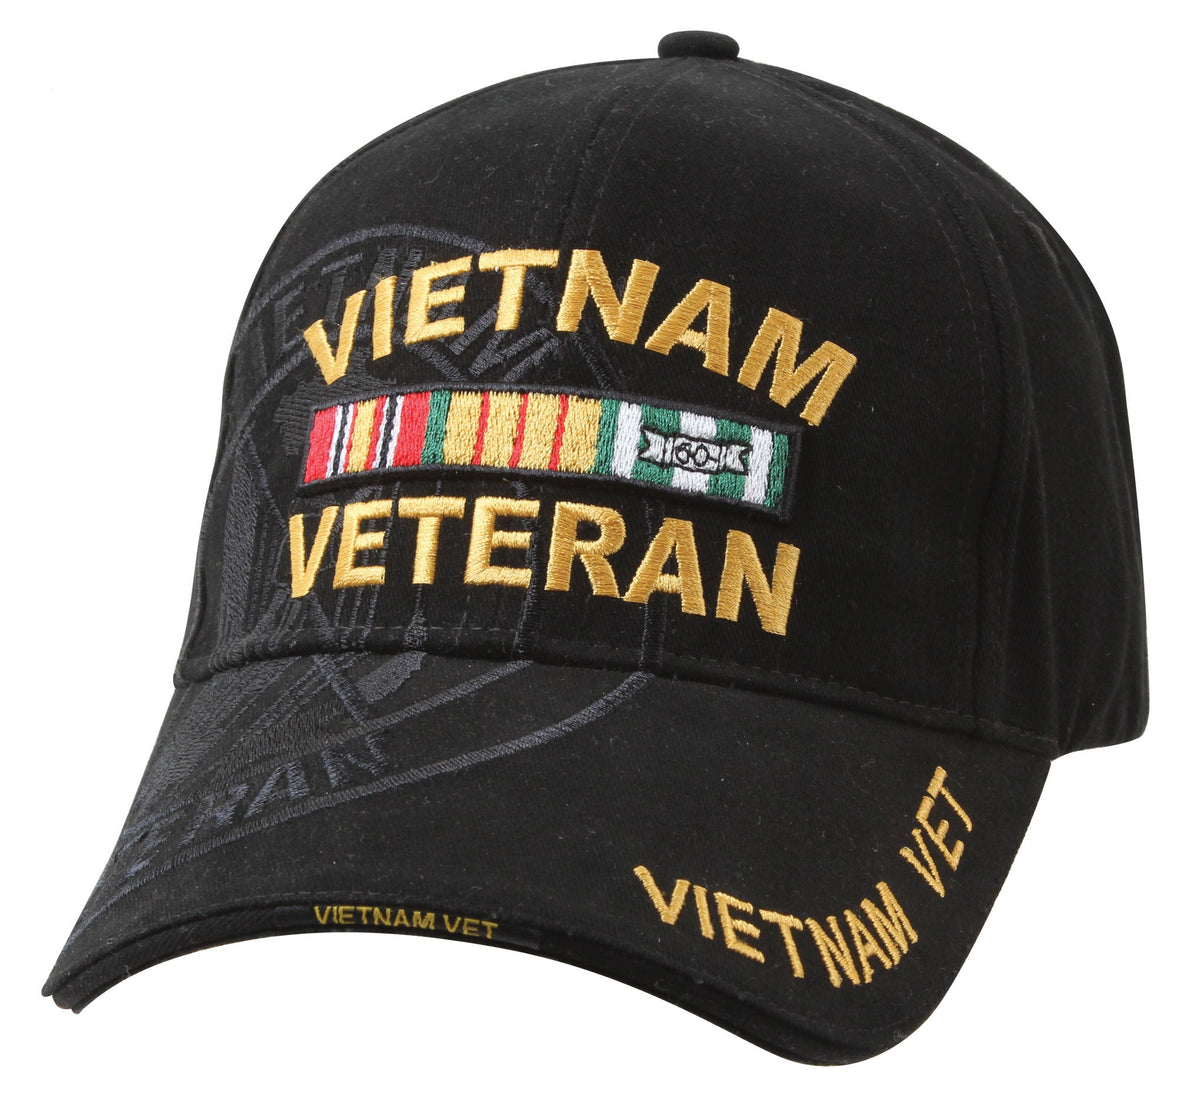 Deluxe Vietnam Veteran Military Low Profile Shadow Cap